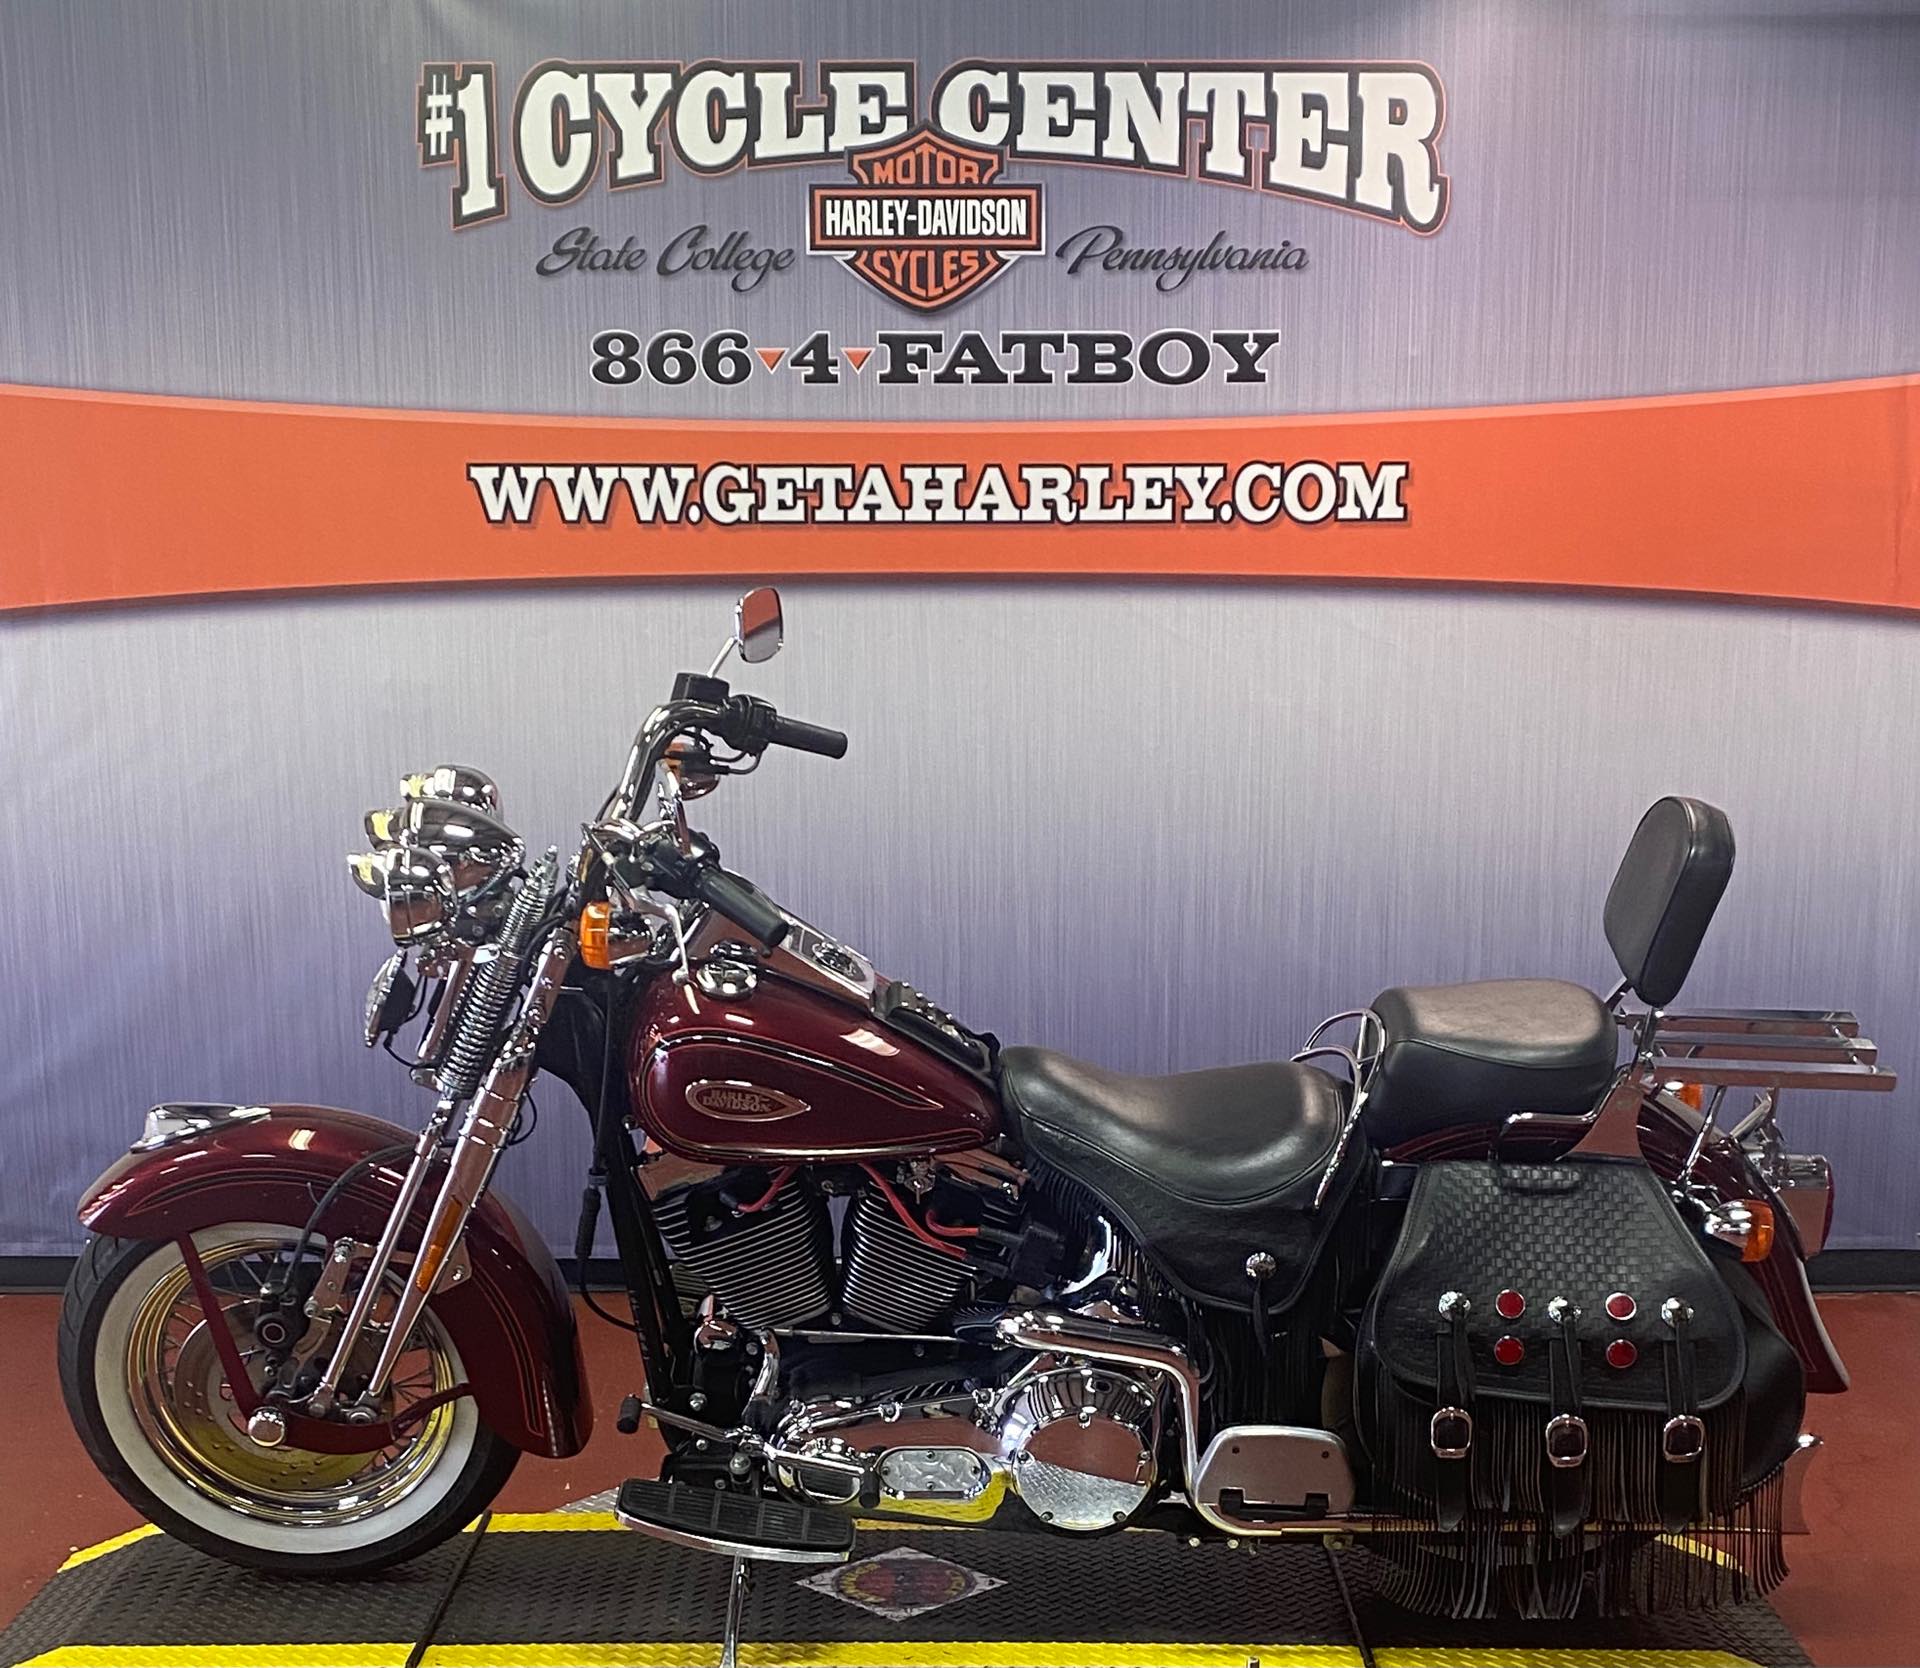 2000 Harley-Davidson FLSTS at #1 Cycle Center Harley-Davidson